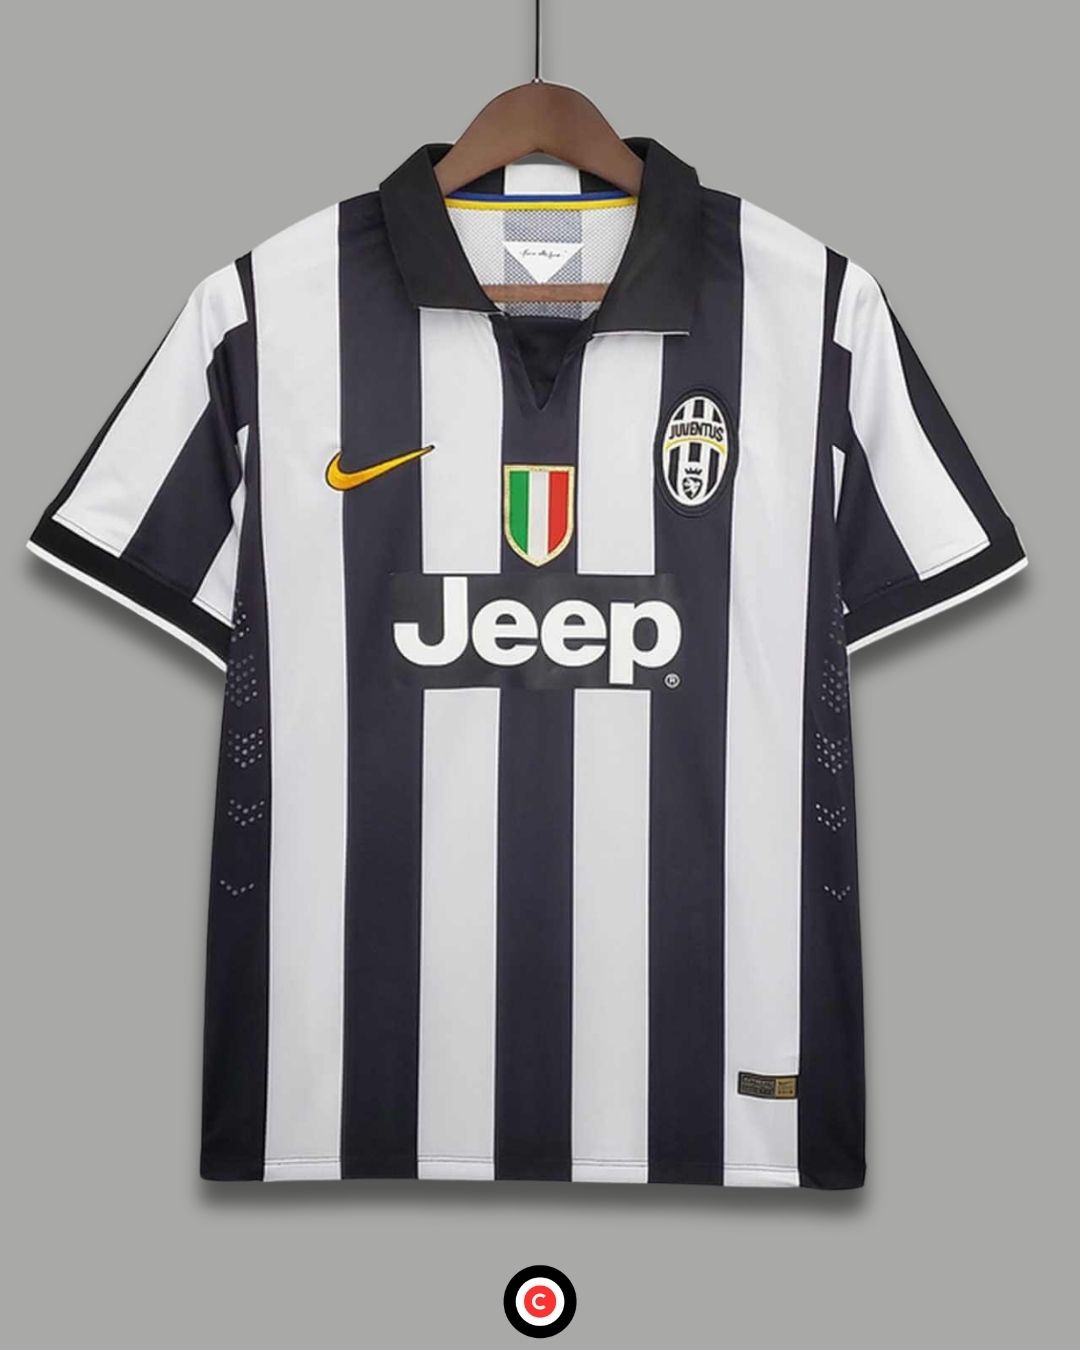 Juventus 14/15 (Home Kit) - Premium  from CatenaccioDesigns - Just €60.99! Shop now at CatenaccioDesigns